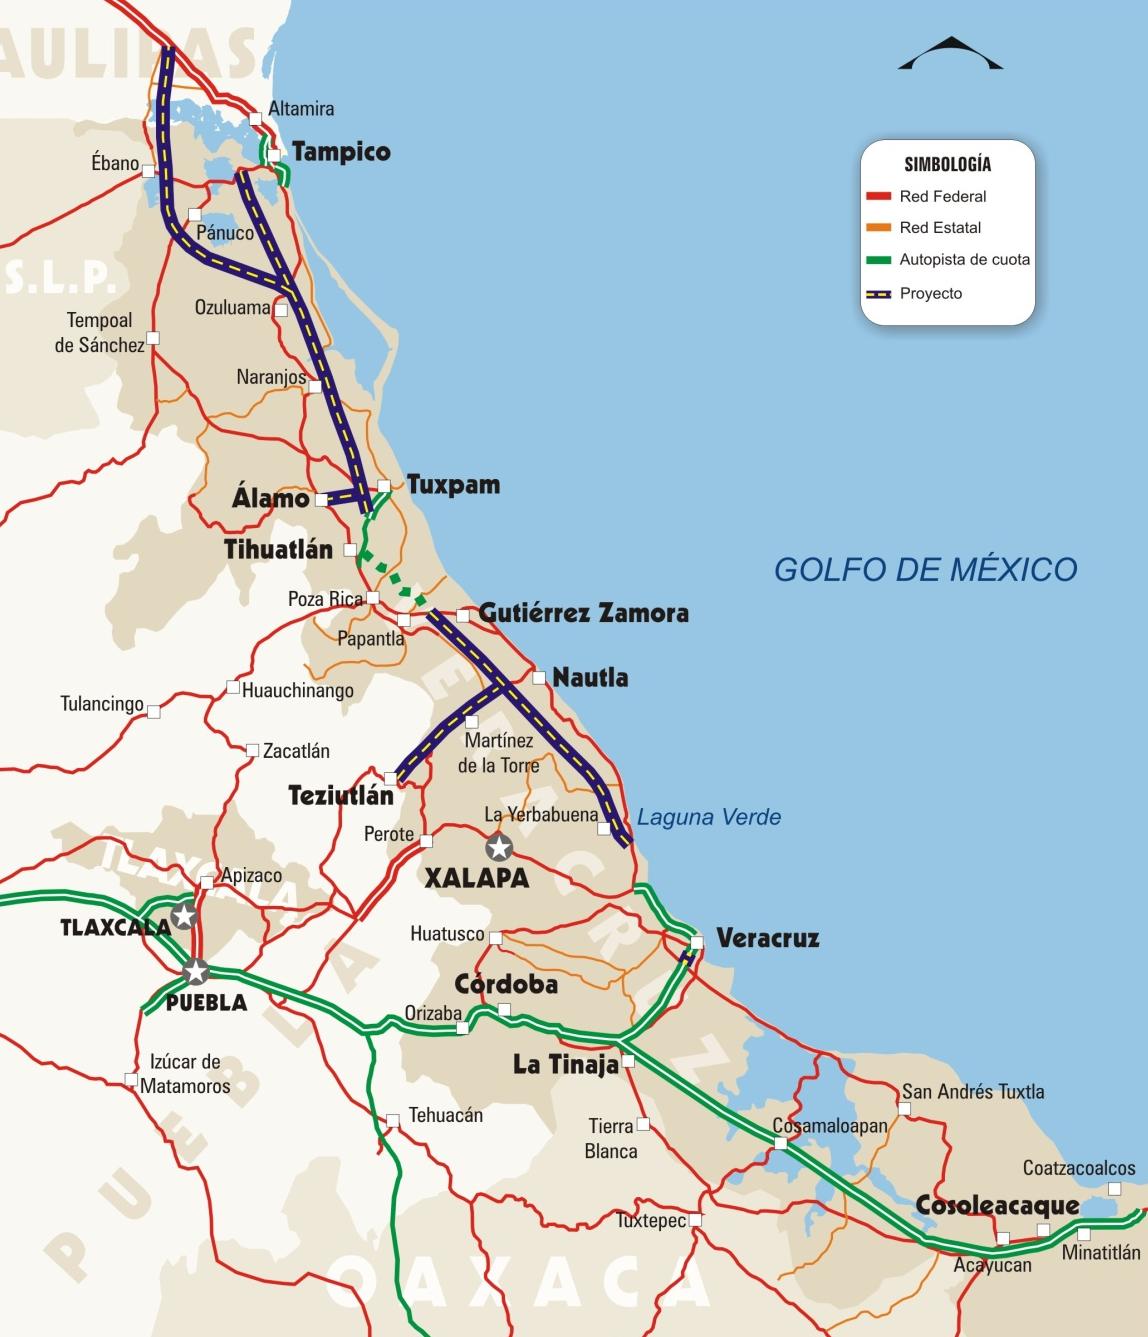 MODELO DE APROVECHAMIENTO DE ACTIVOS Paquete del Golfo en preparación Activos a concesionar pps 1 1. Tihuatlán-Gutiérrez Zamora de 37 km 2. Córdoba-Veracruz de 98 km 3.